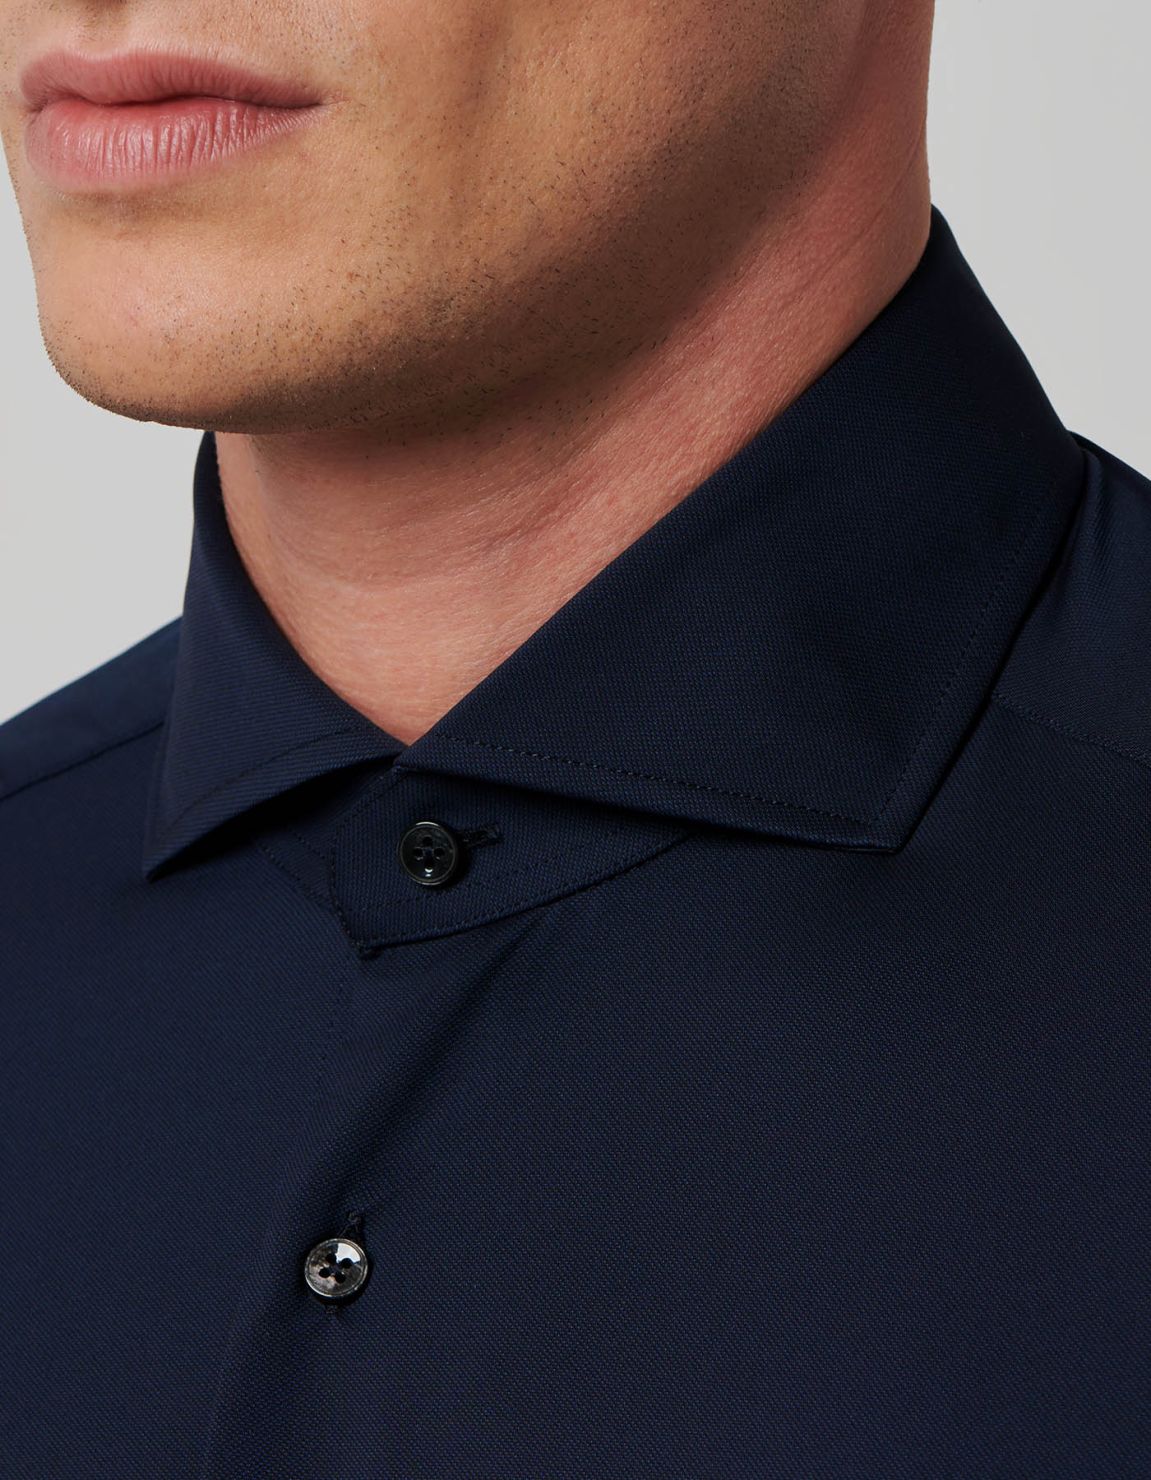 Camicia Collo francese Tinta Unita Armaturato Blu navy Tailor Custom Fit 2